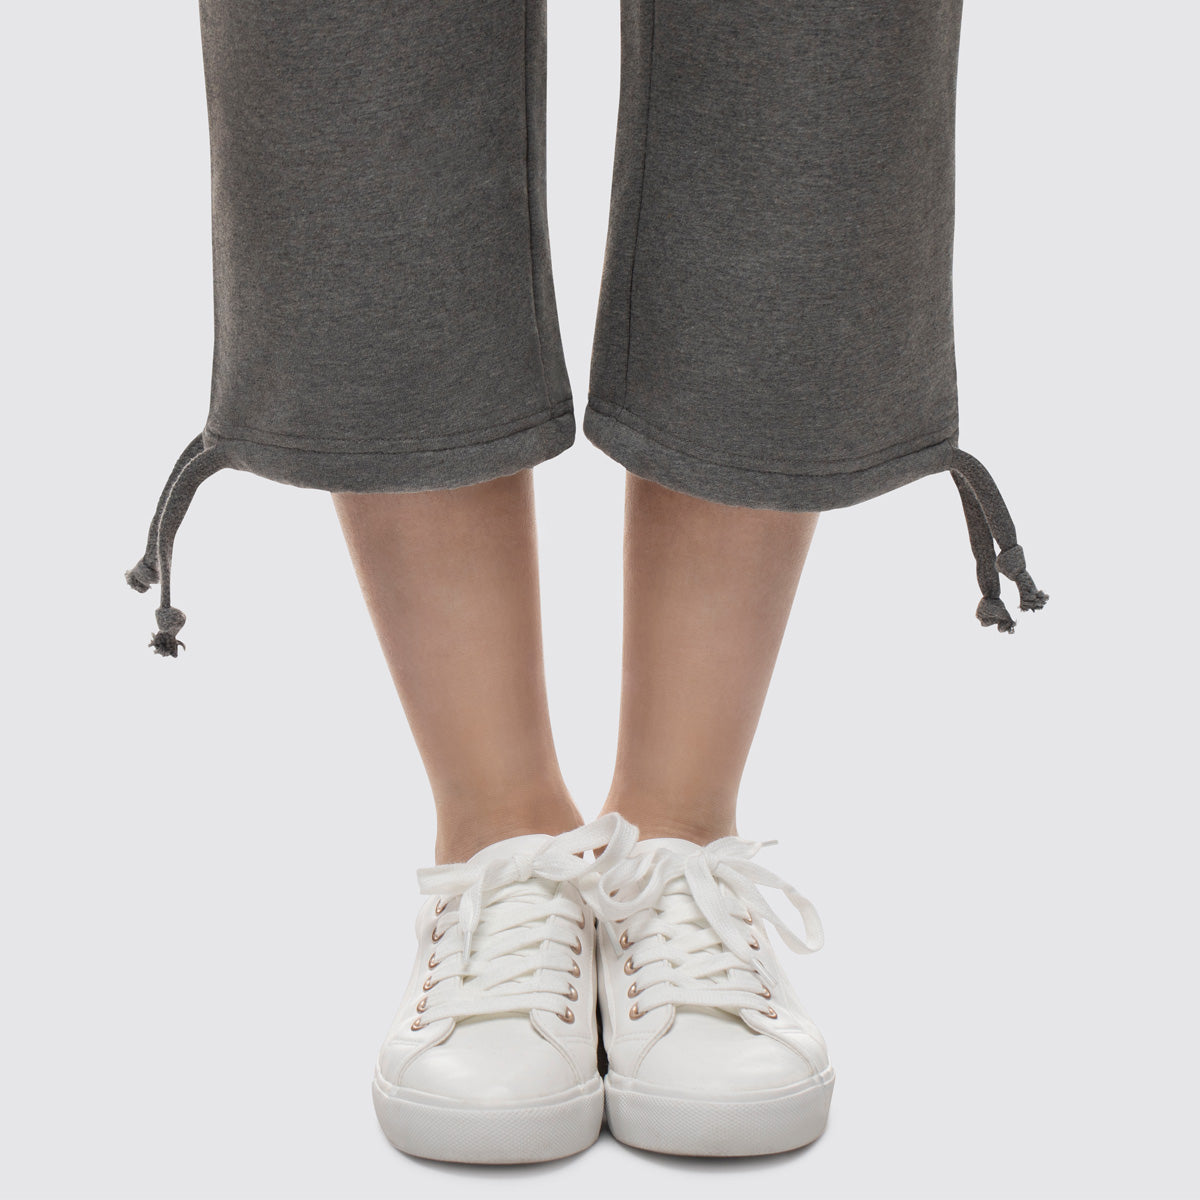 donna-conny-cotone organico-34-pantaloni-bianco-frontale